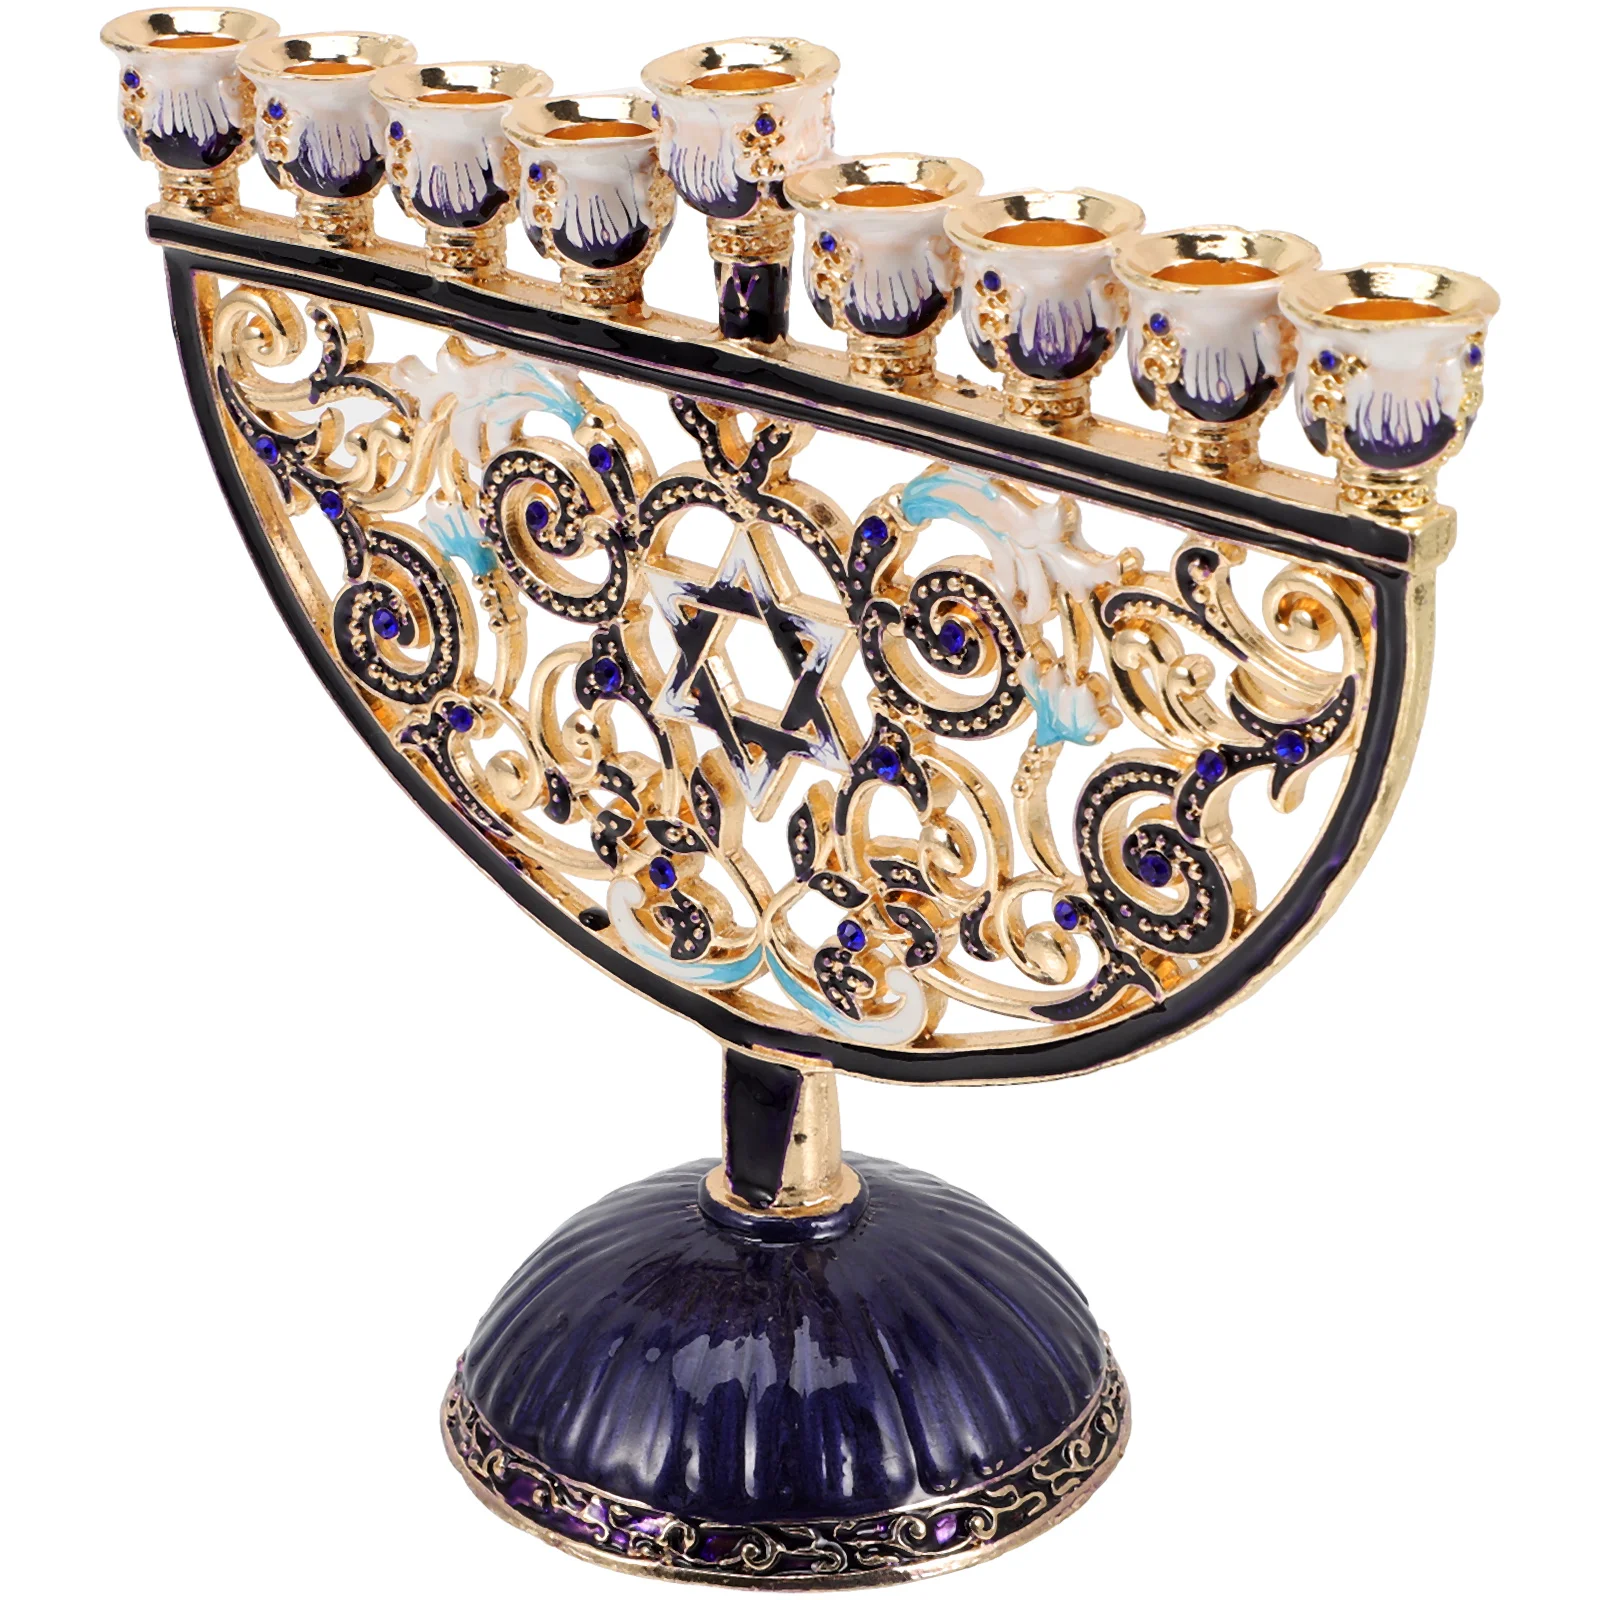 

Desktop Candlesticks Holder Ornament Jewish New Year Table Metal Tealight Container Bracket Elegant Hanukkah Vintage Decoration